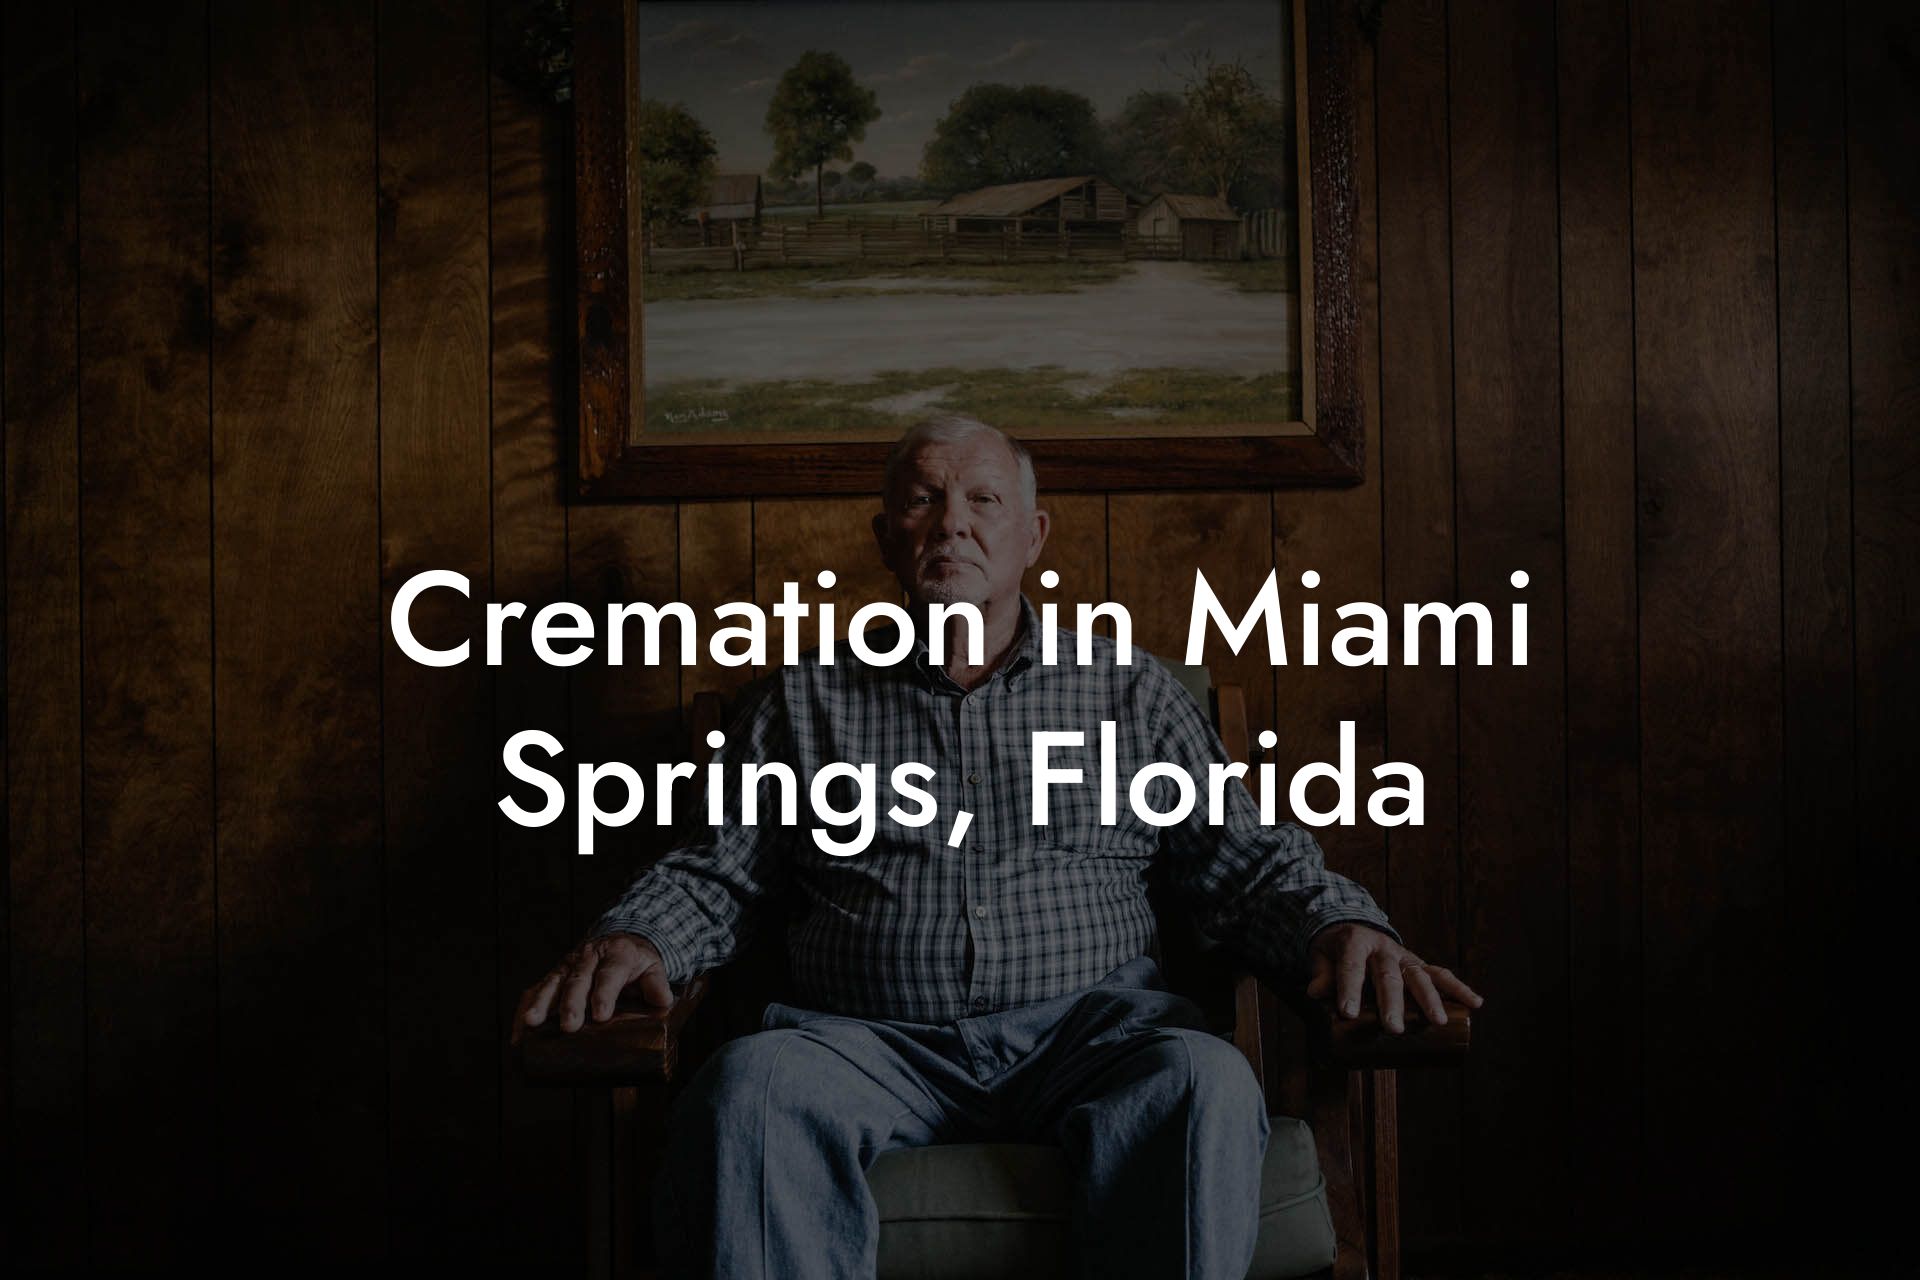 Cremation in Miami Springs, Florida